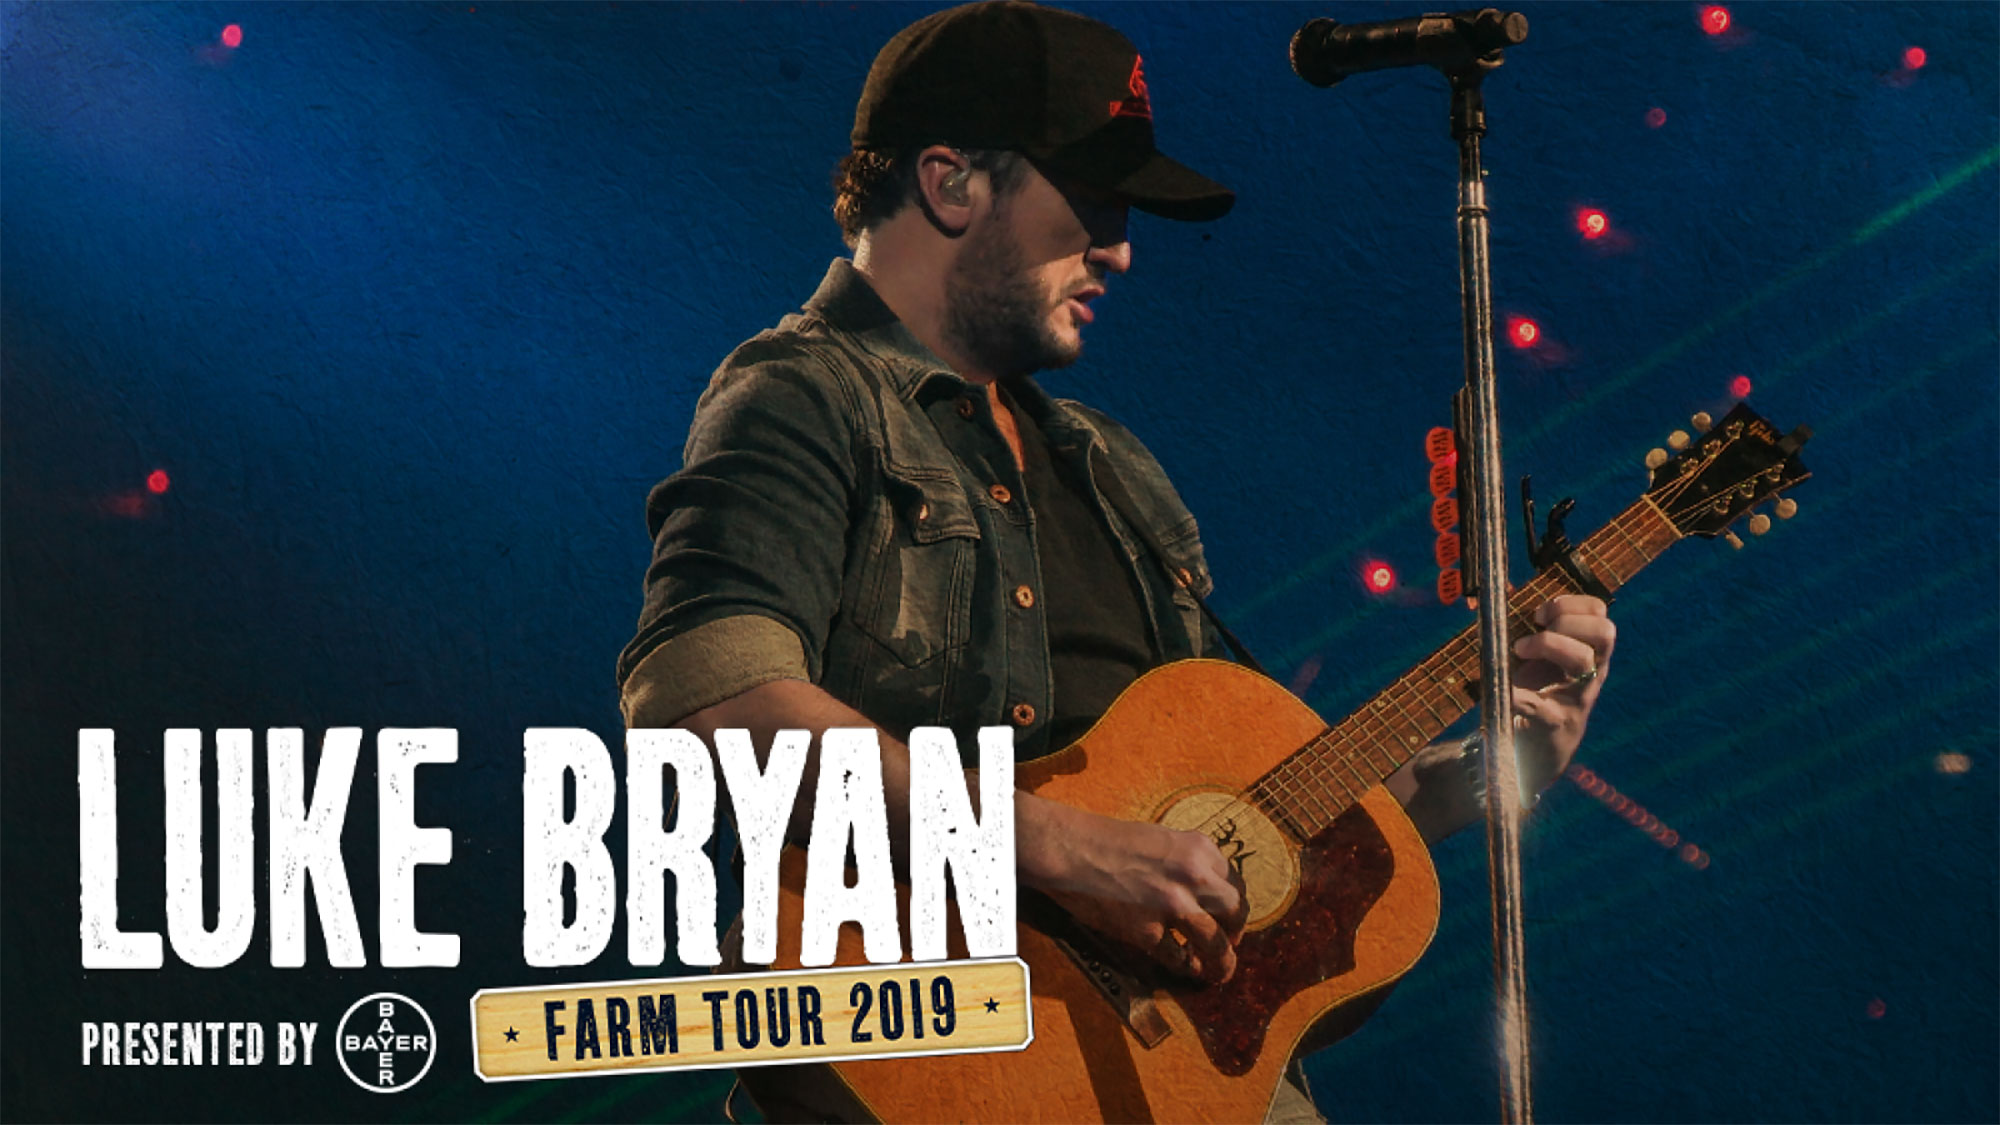 Luke Bryan gets ready to kick off the 2019 Farm Tour AGDAILY